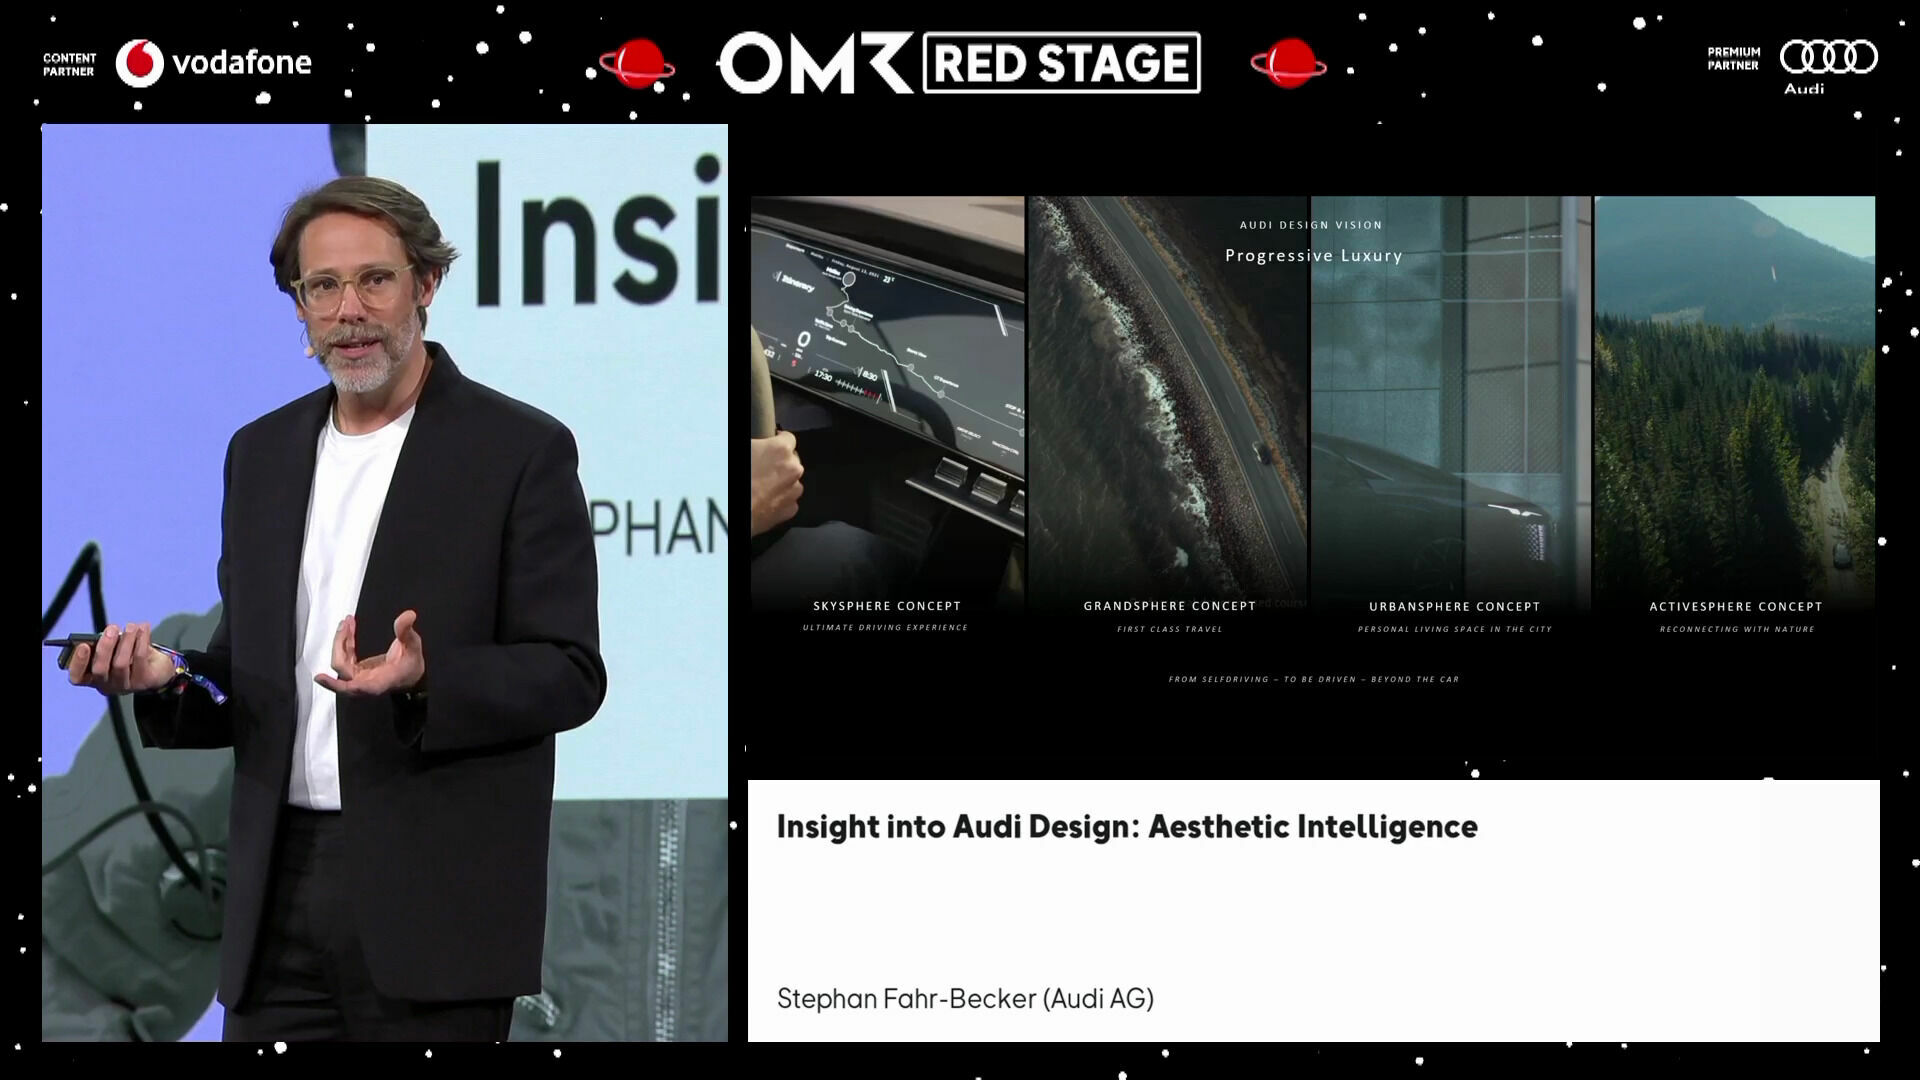 Audi x OMR – Einblicke in Audi Design: Ästhetische Intelligenz